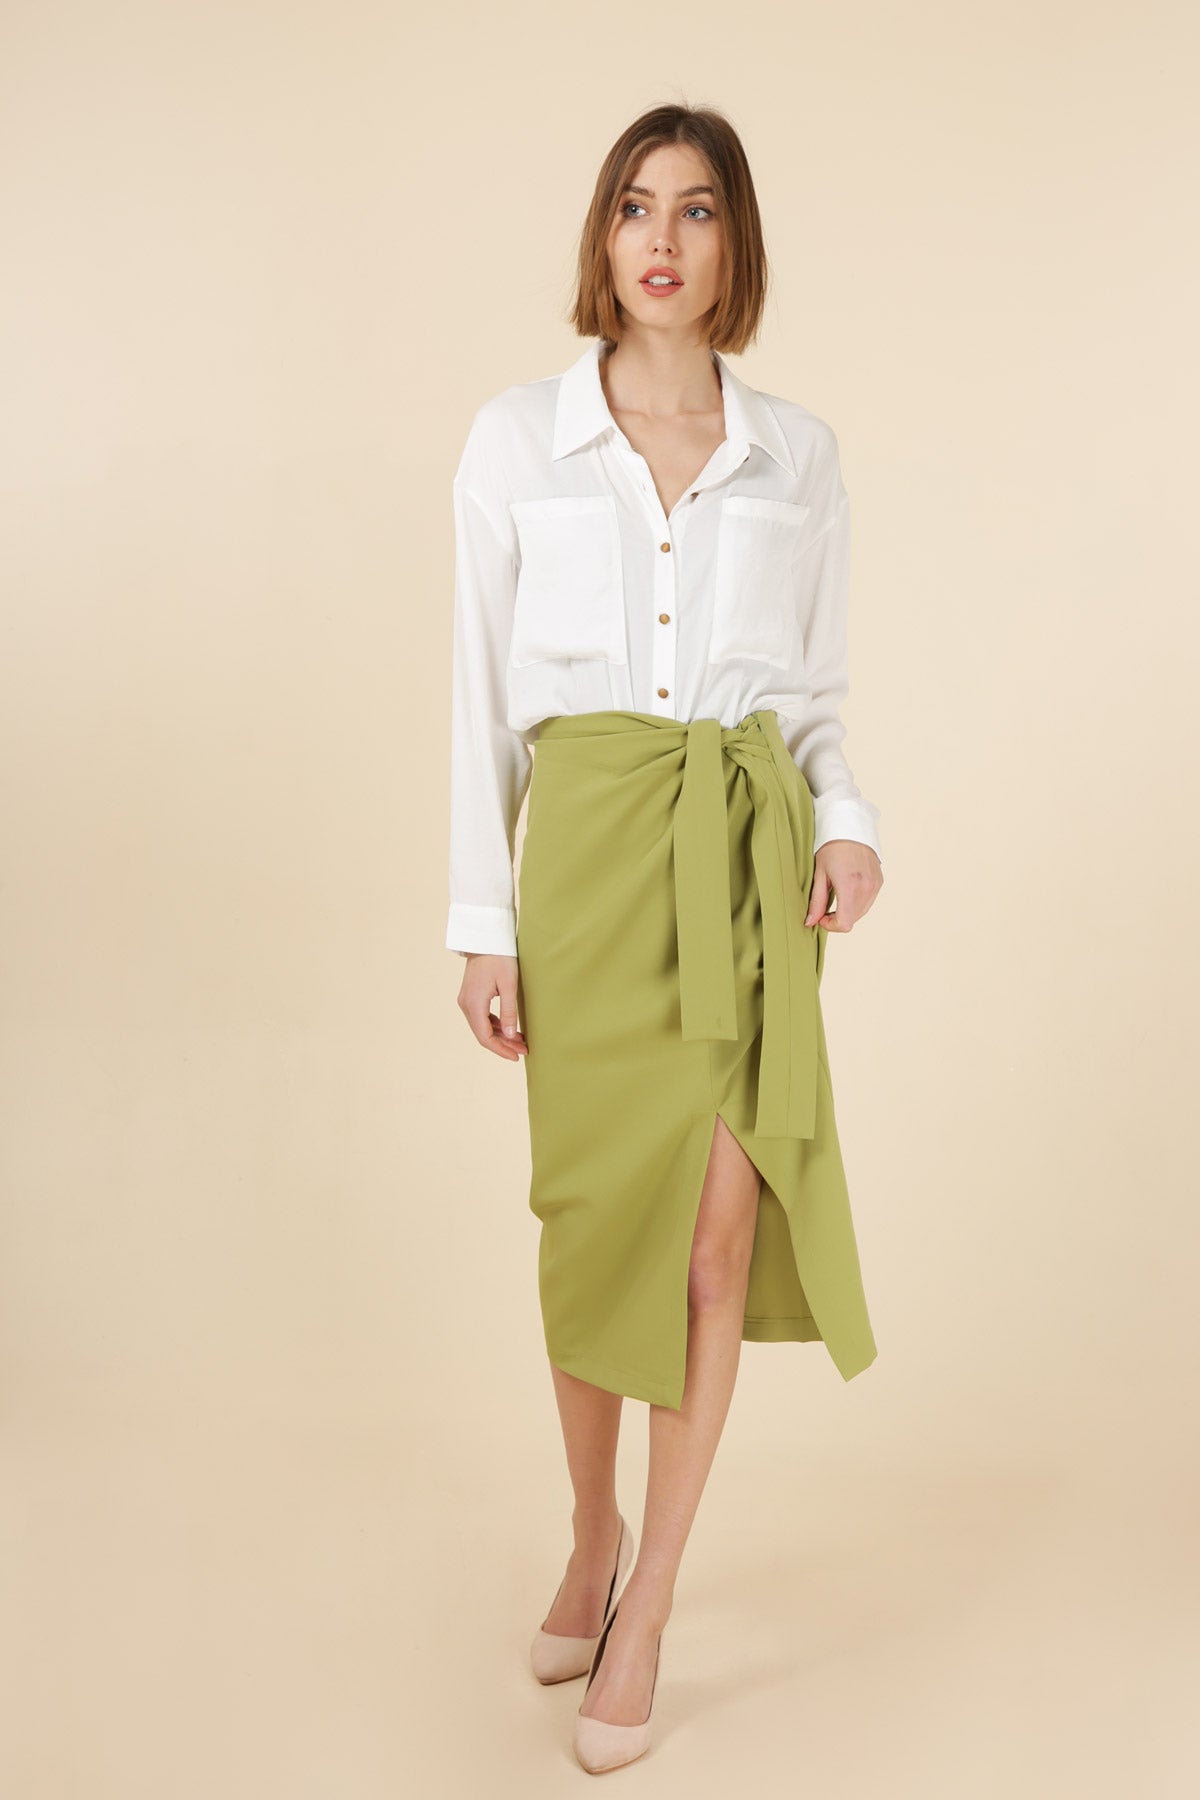 Green Apple Skirt - NIXII Clothing